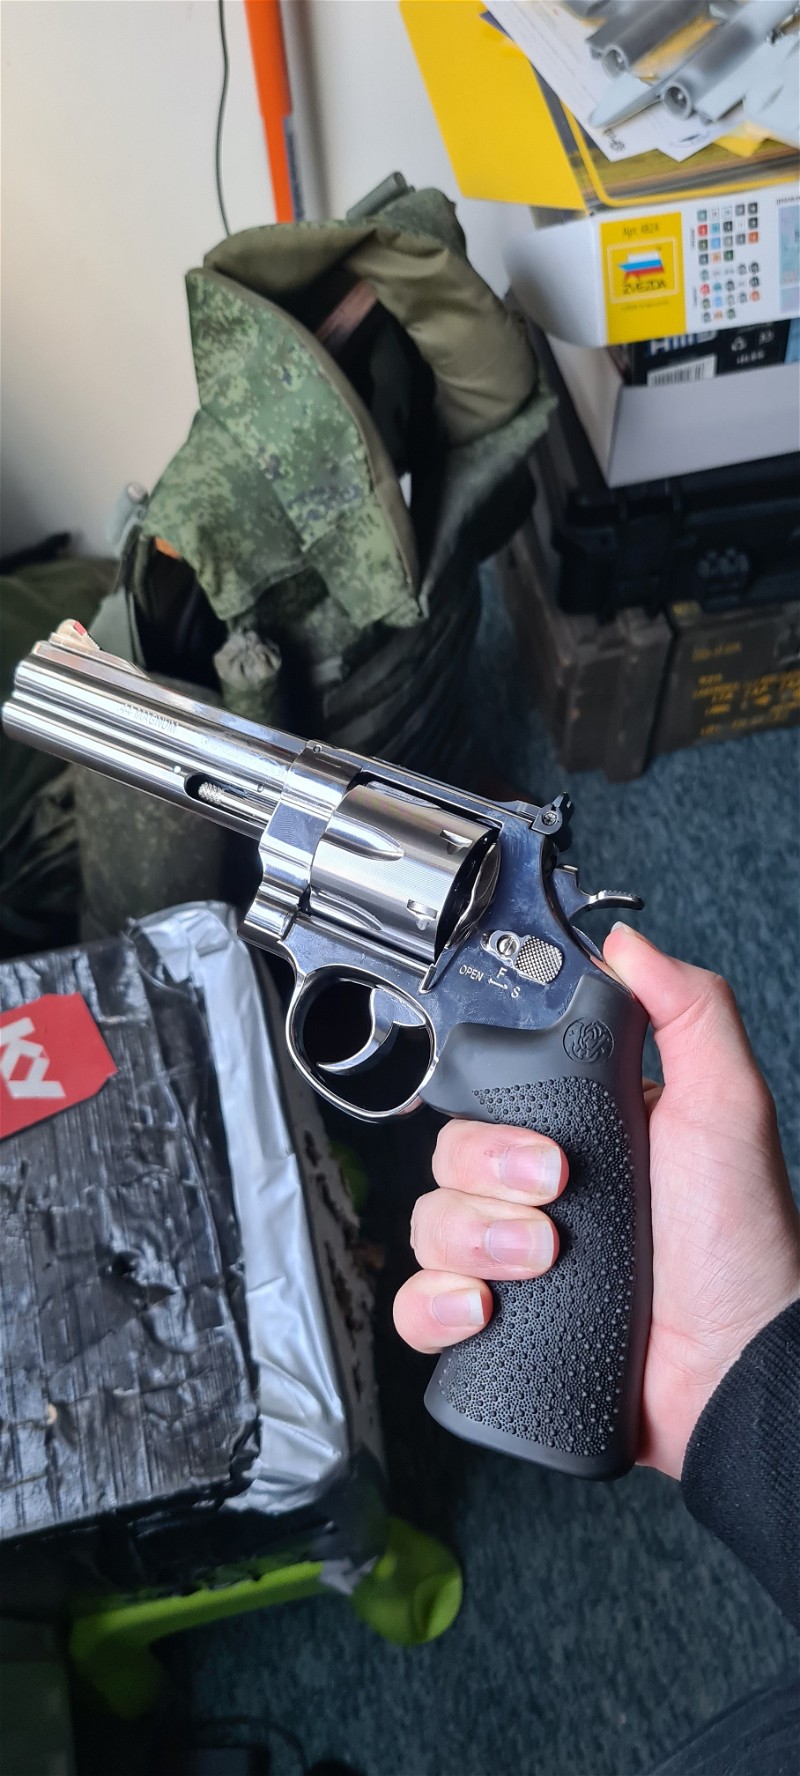 Image 1 for S&W 625 C02 Revolver